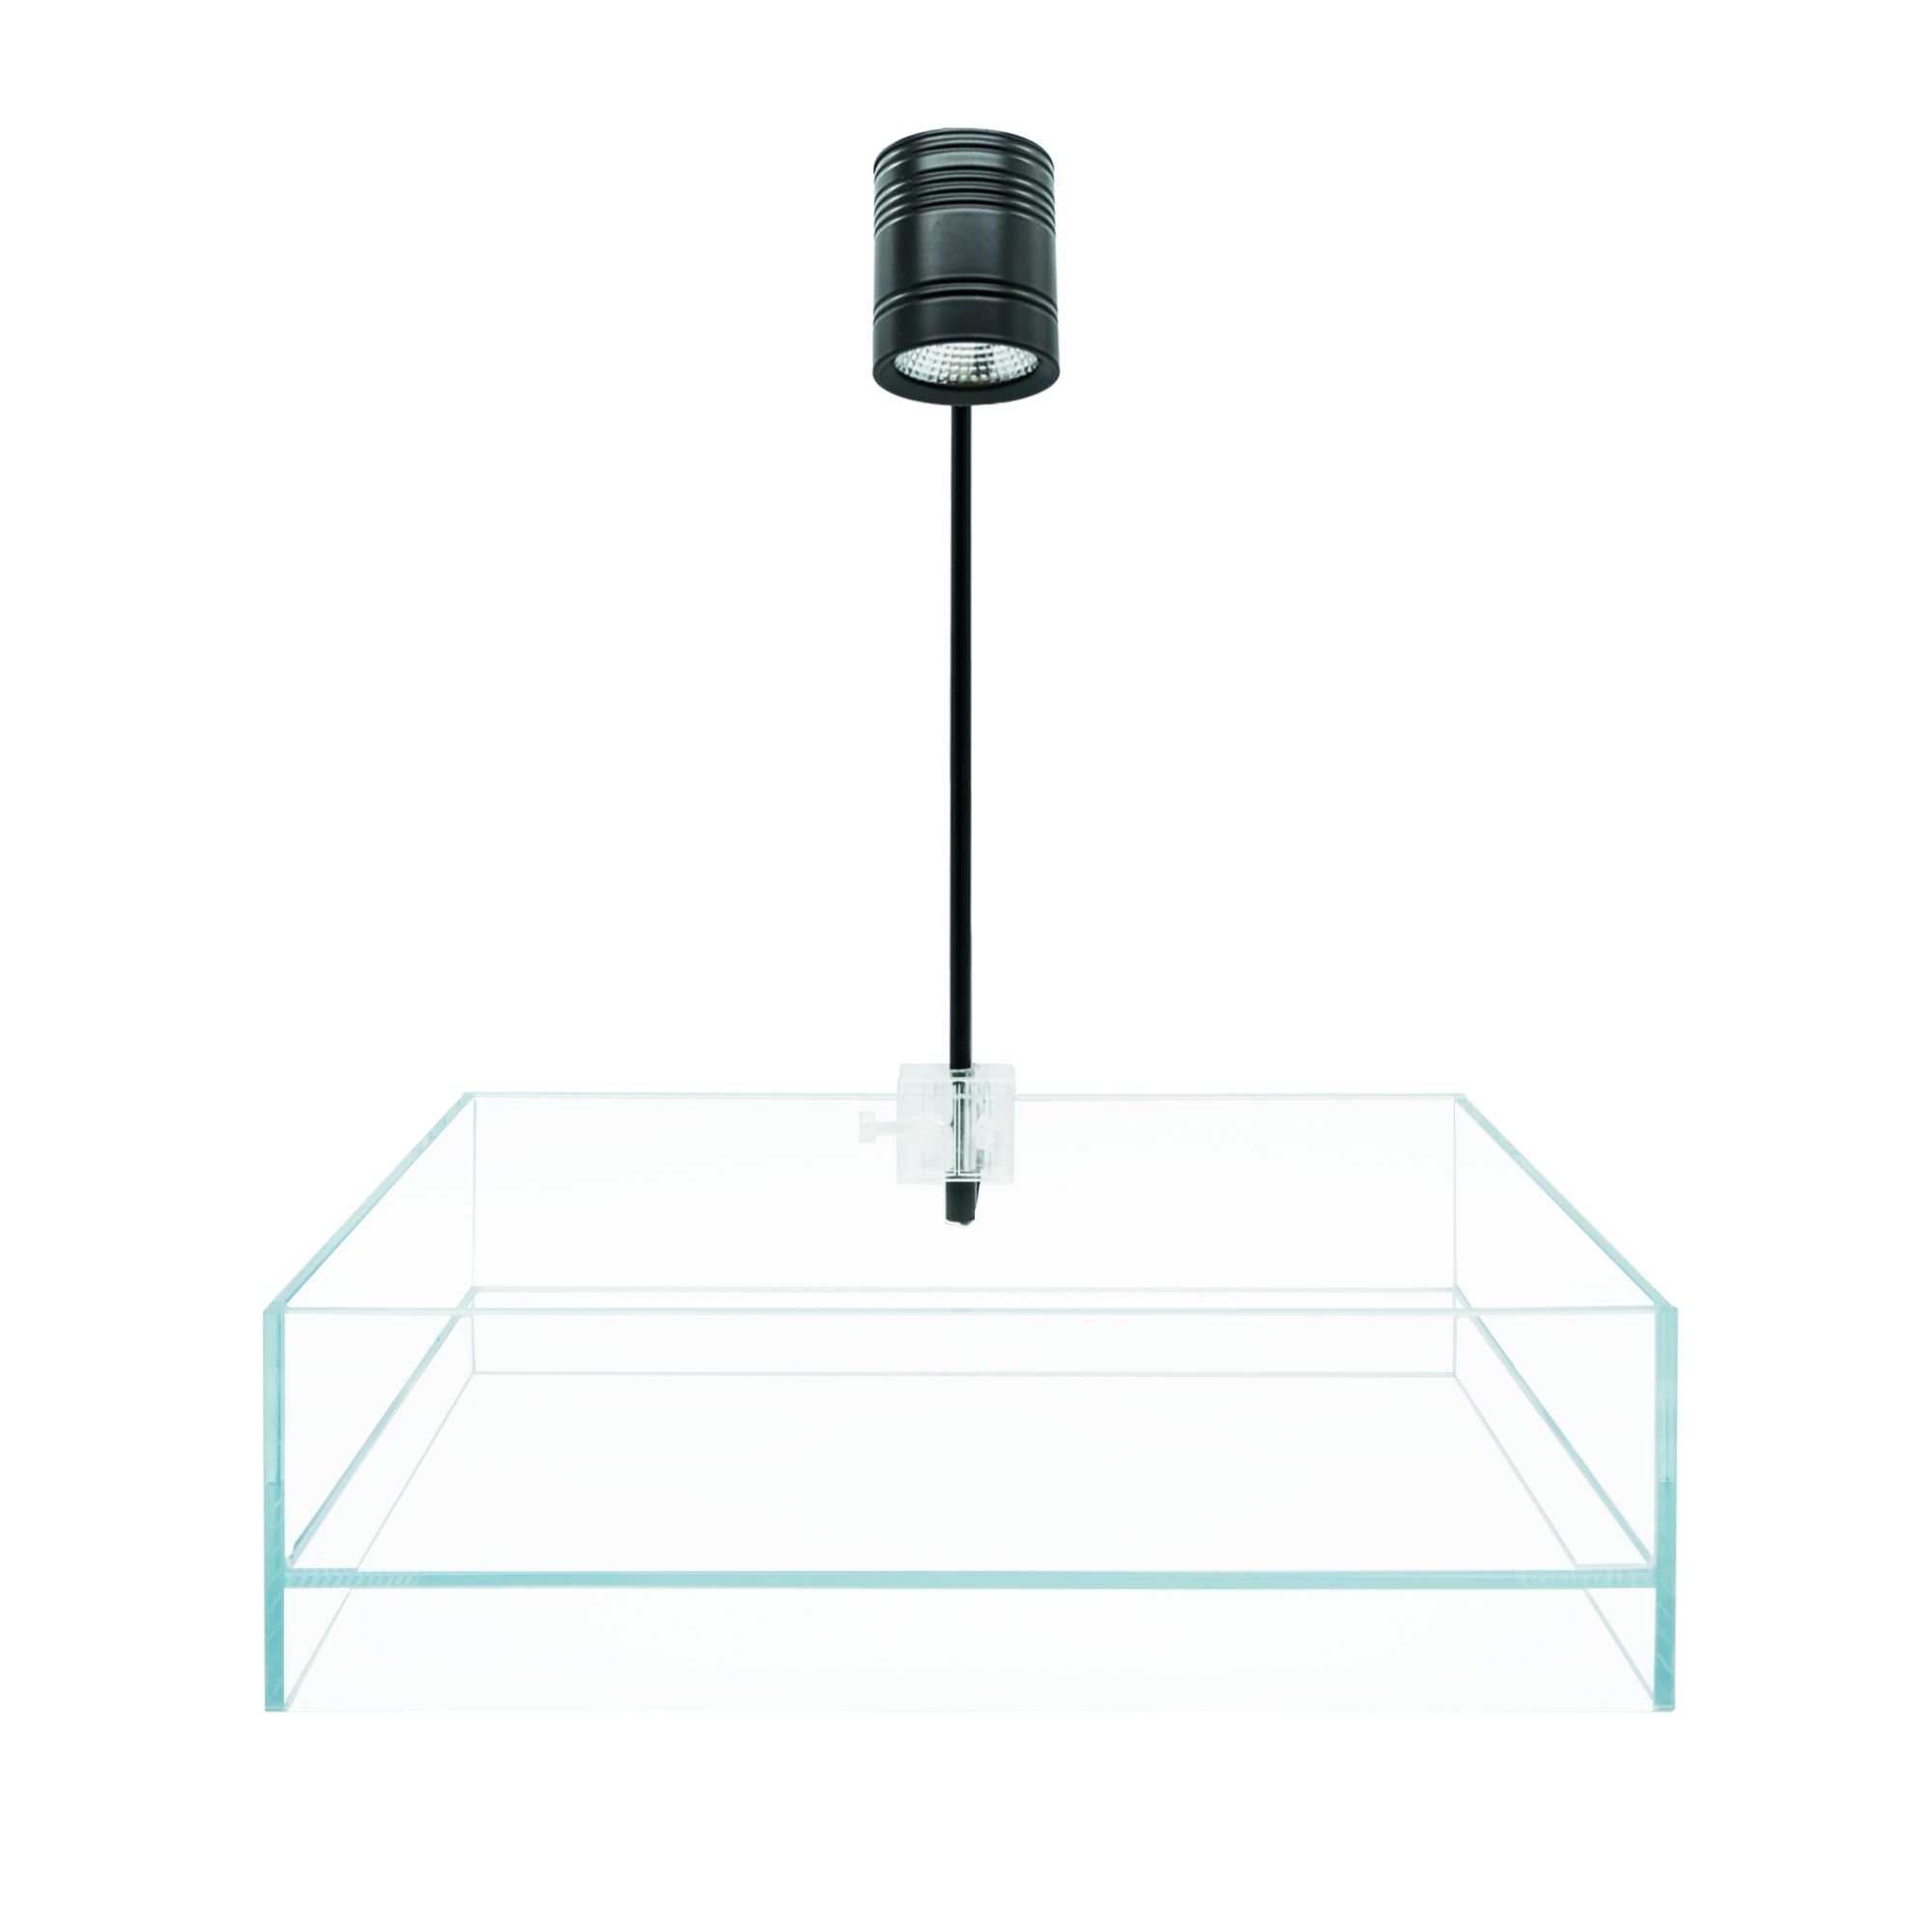 HIRO Aquatics Medium Shallow Rimless Tank, low-iron glass, for Wabikusa, Little Pond, Nano Terrarium